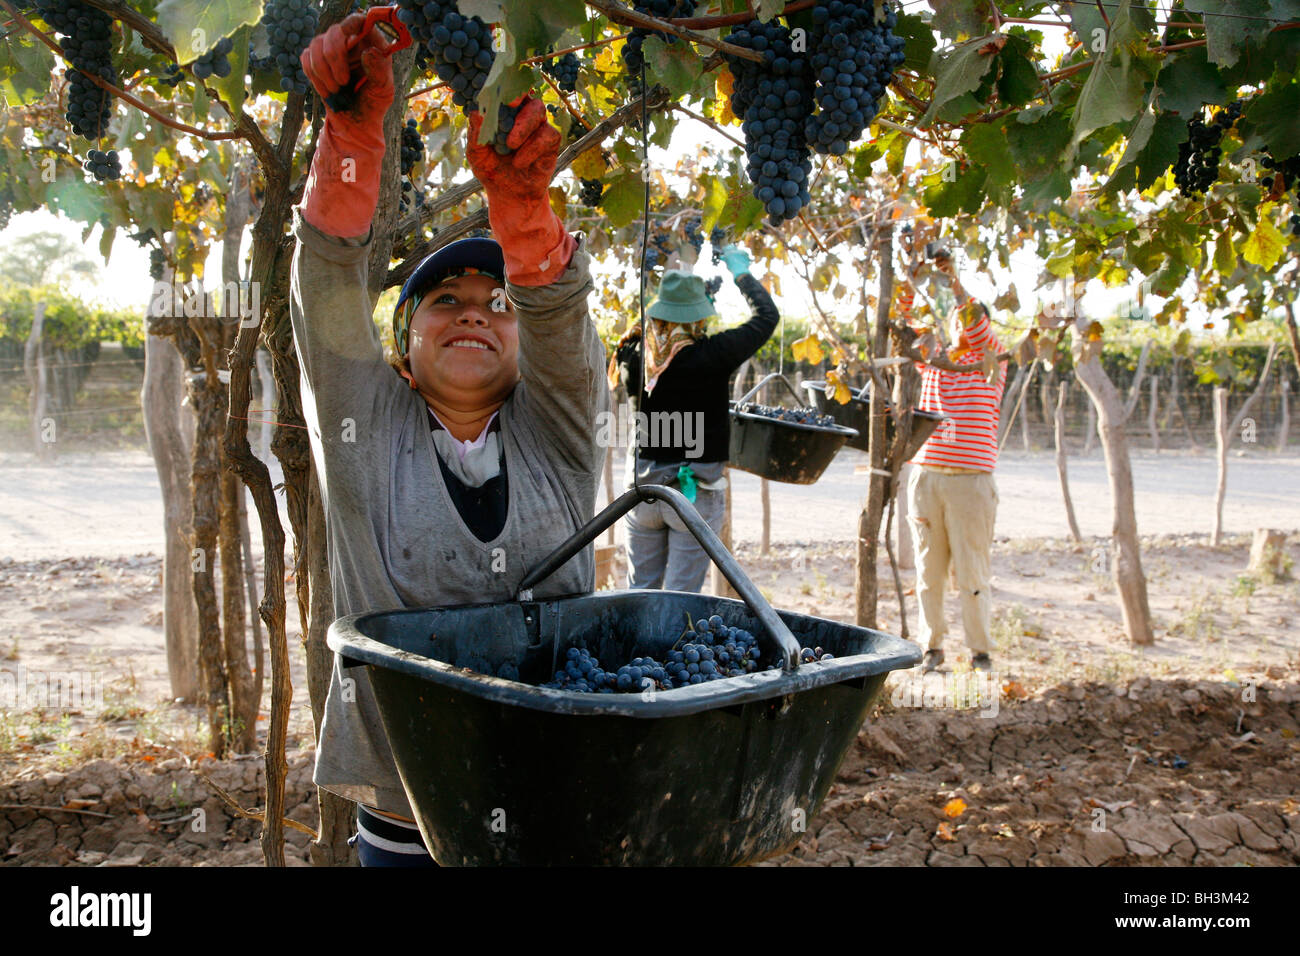 Woman harvesting grapes at a vineyard in lujan de Cuyo, Mendoza, Argentina. Stock Photo